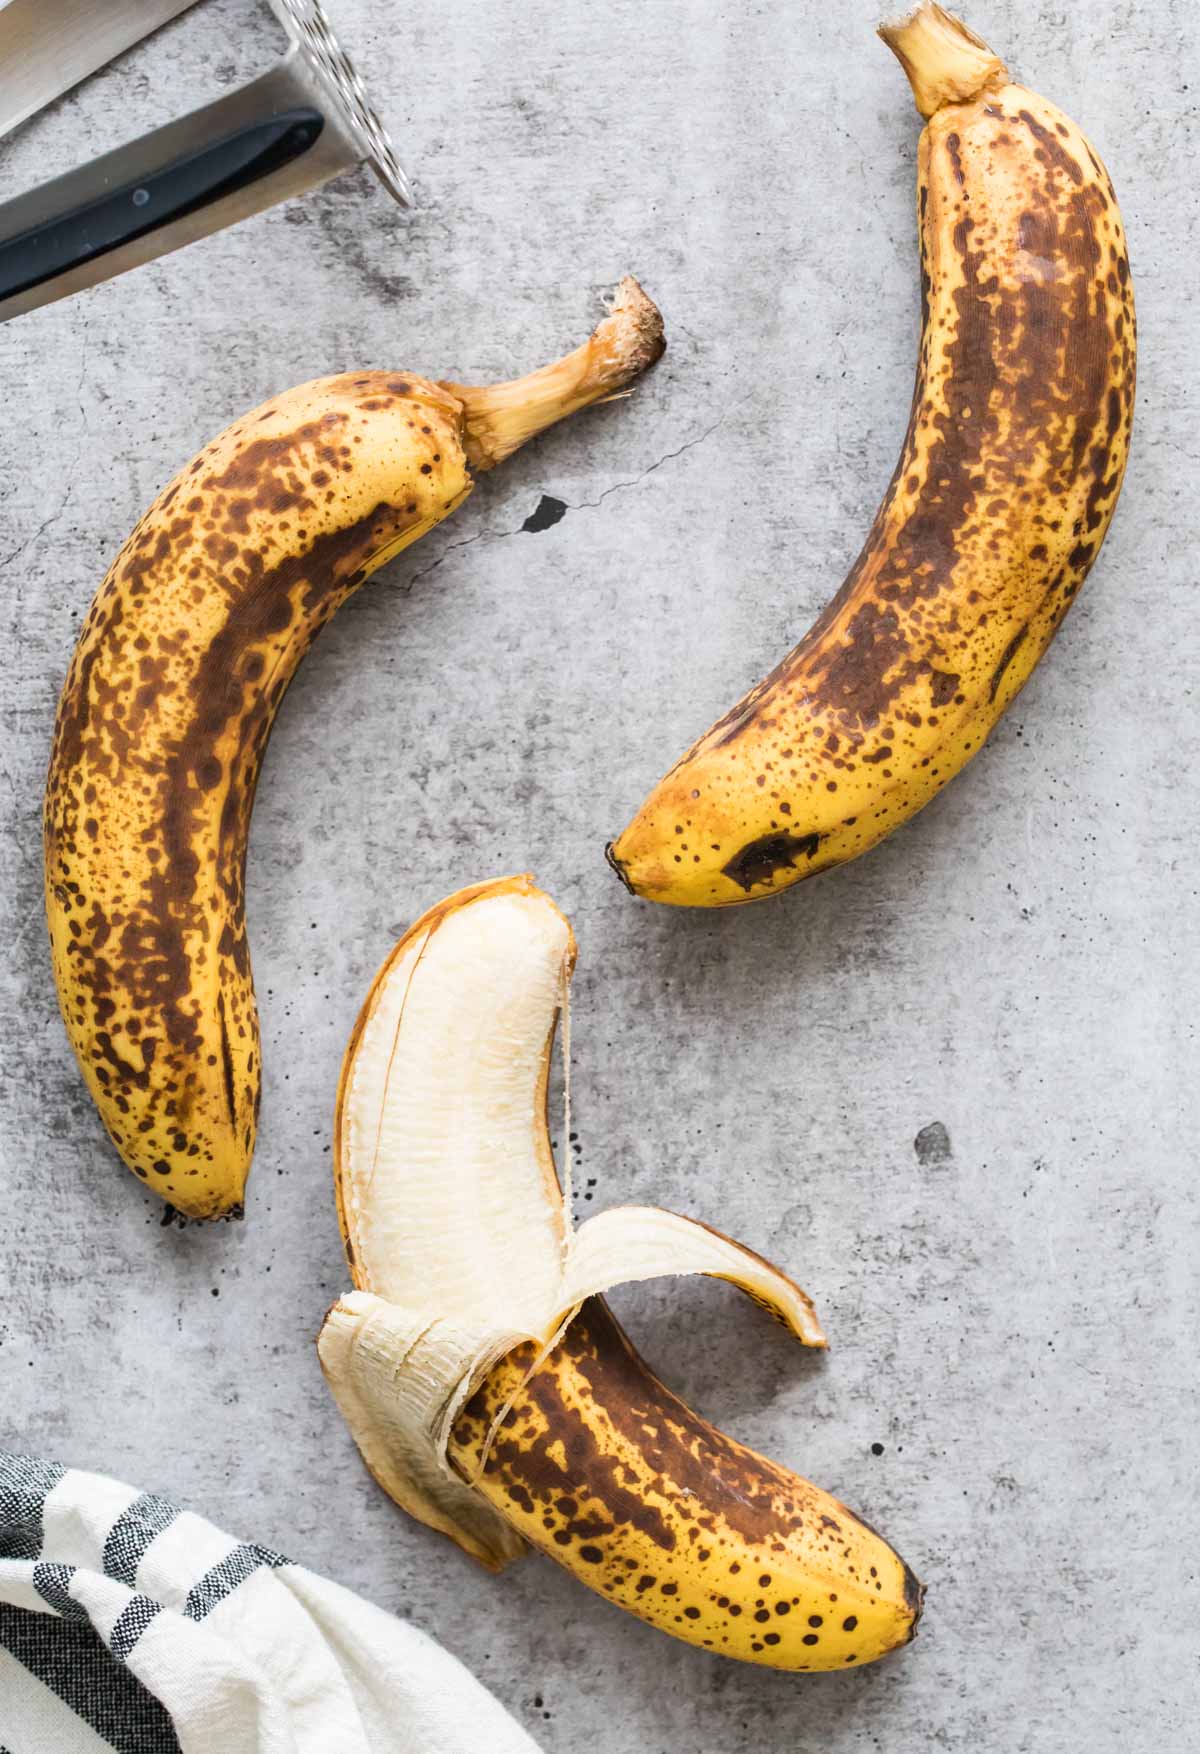 three bananas, one partially unpeeled